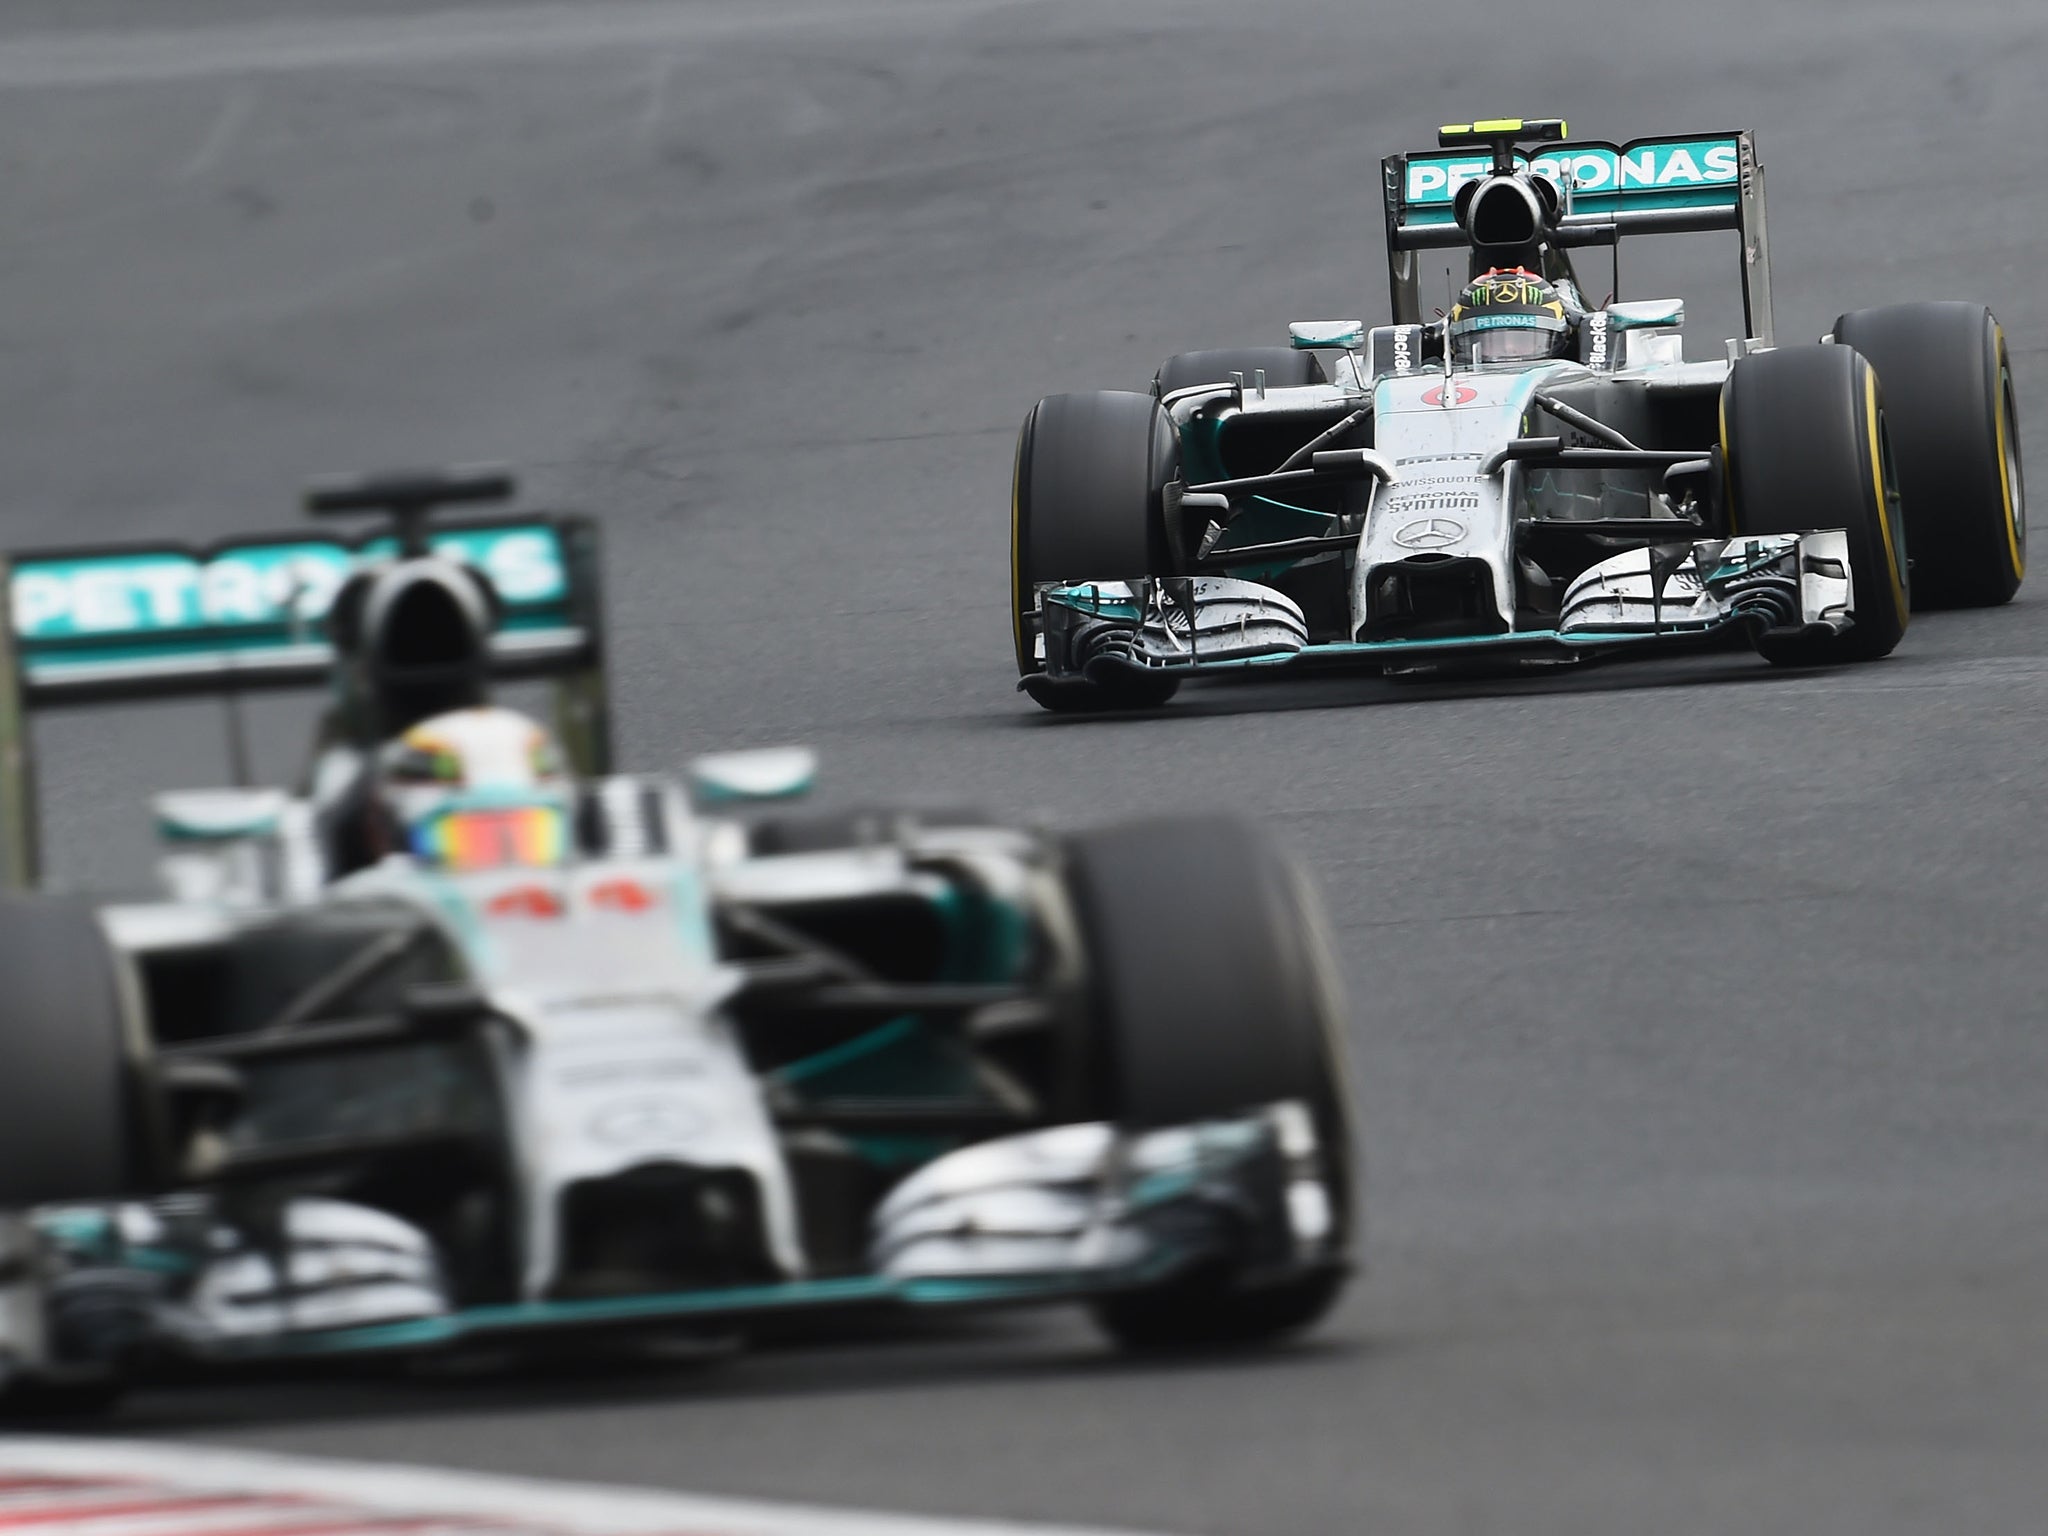 Lewis Hamilton pictured ahead of Nico Rosberg